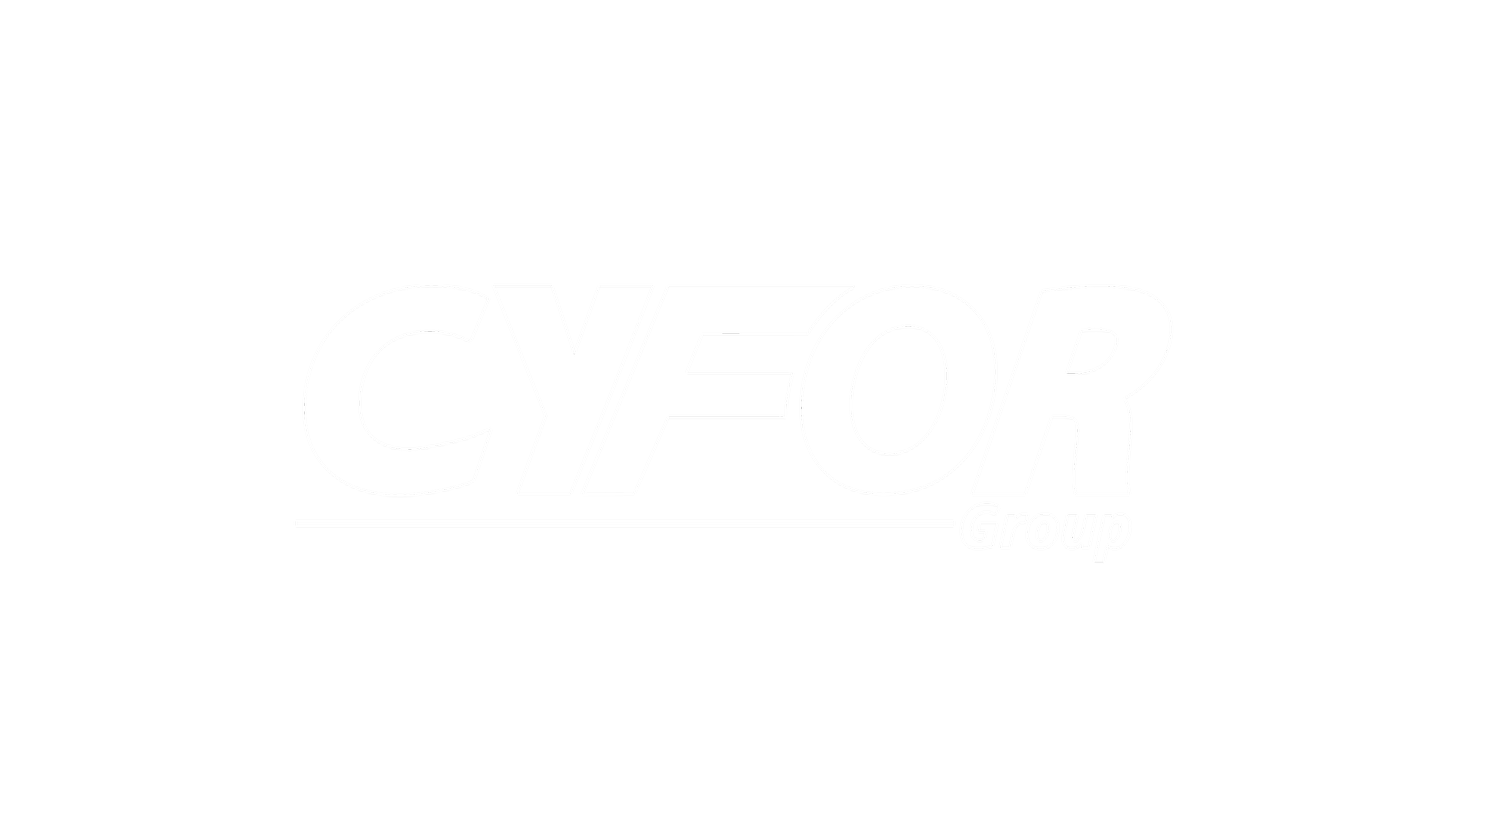 CYFOR Group